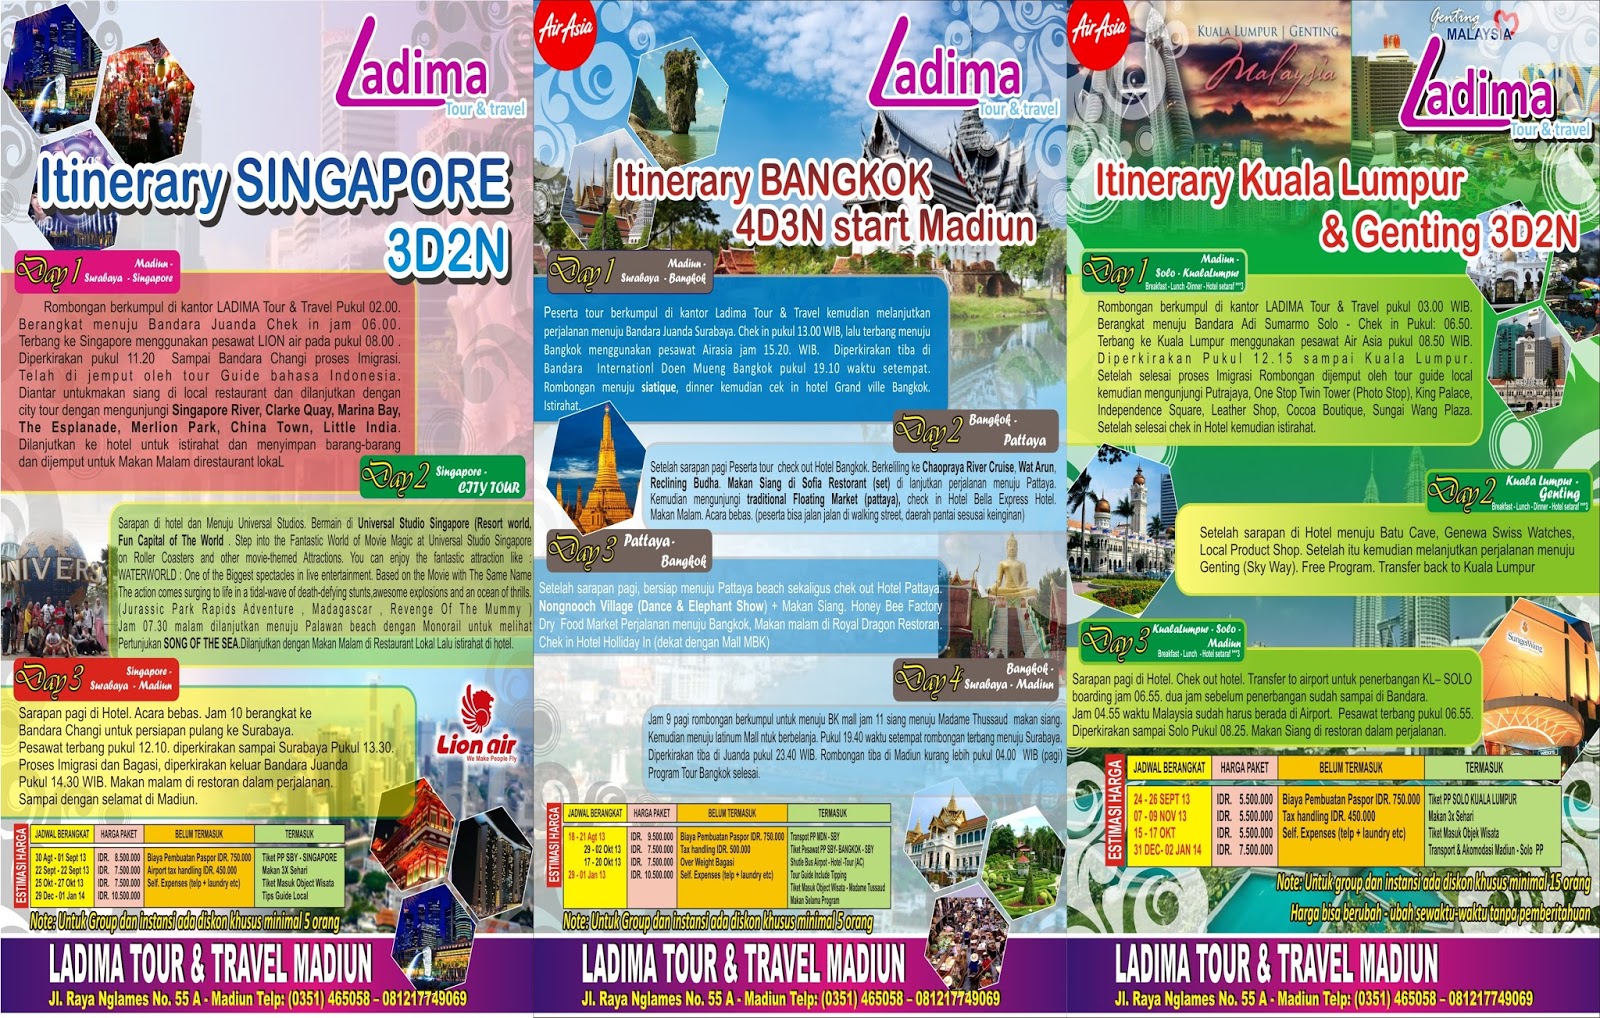 ladima tour and travel